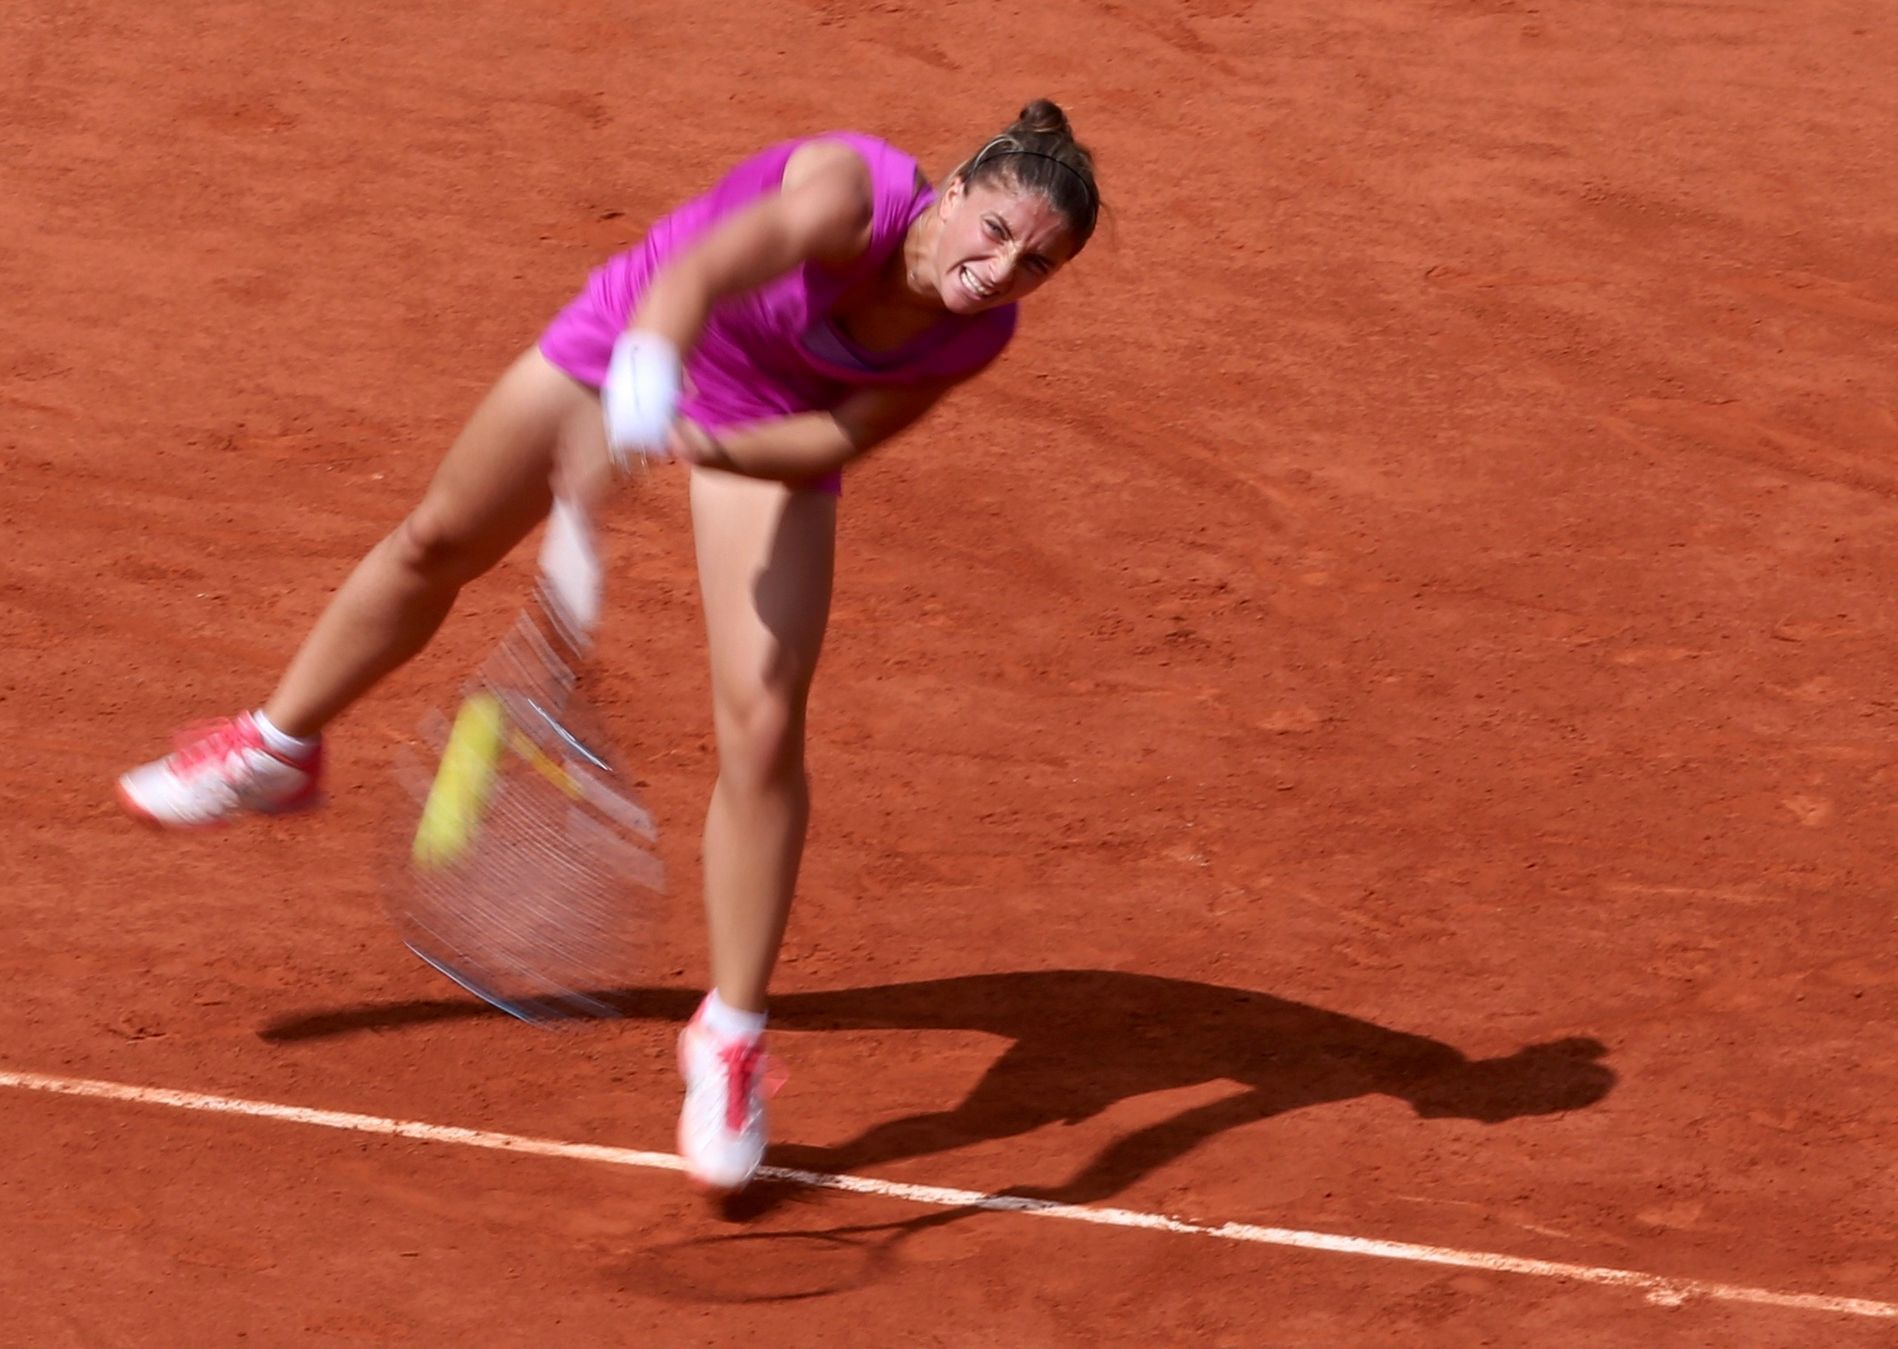 Sara Erraniová v semifinále French Open